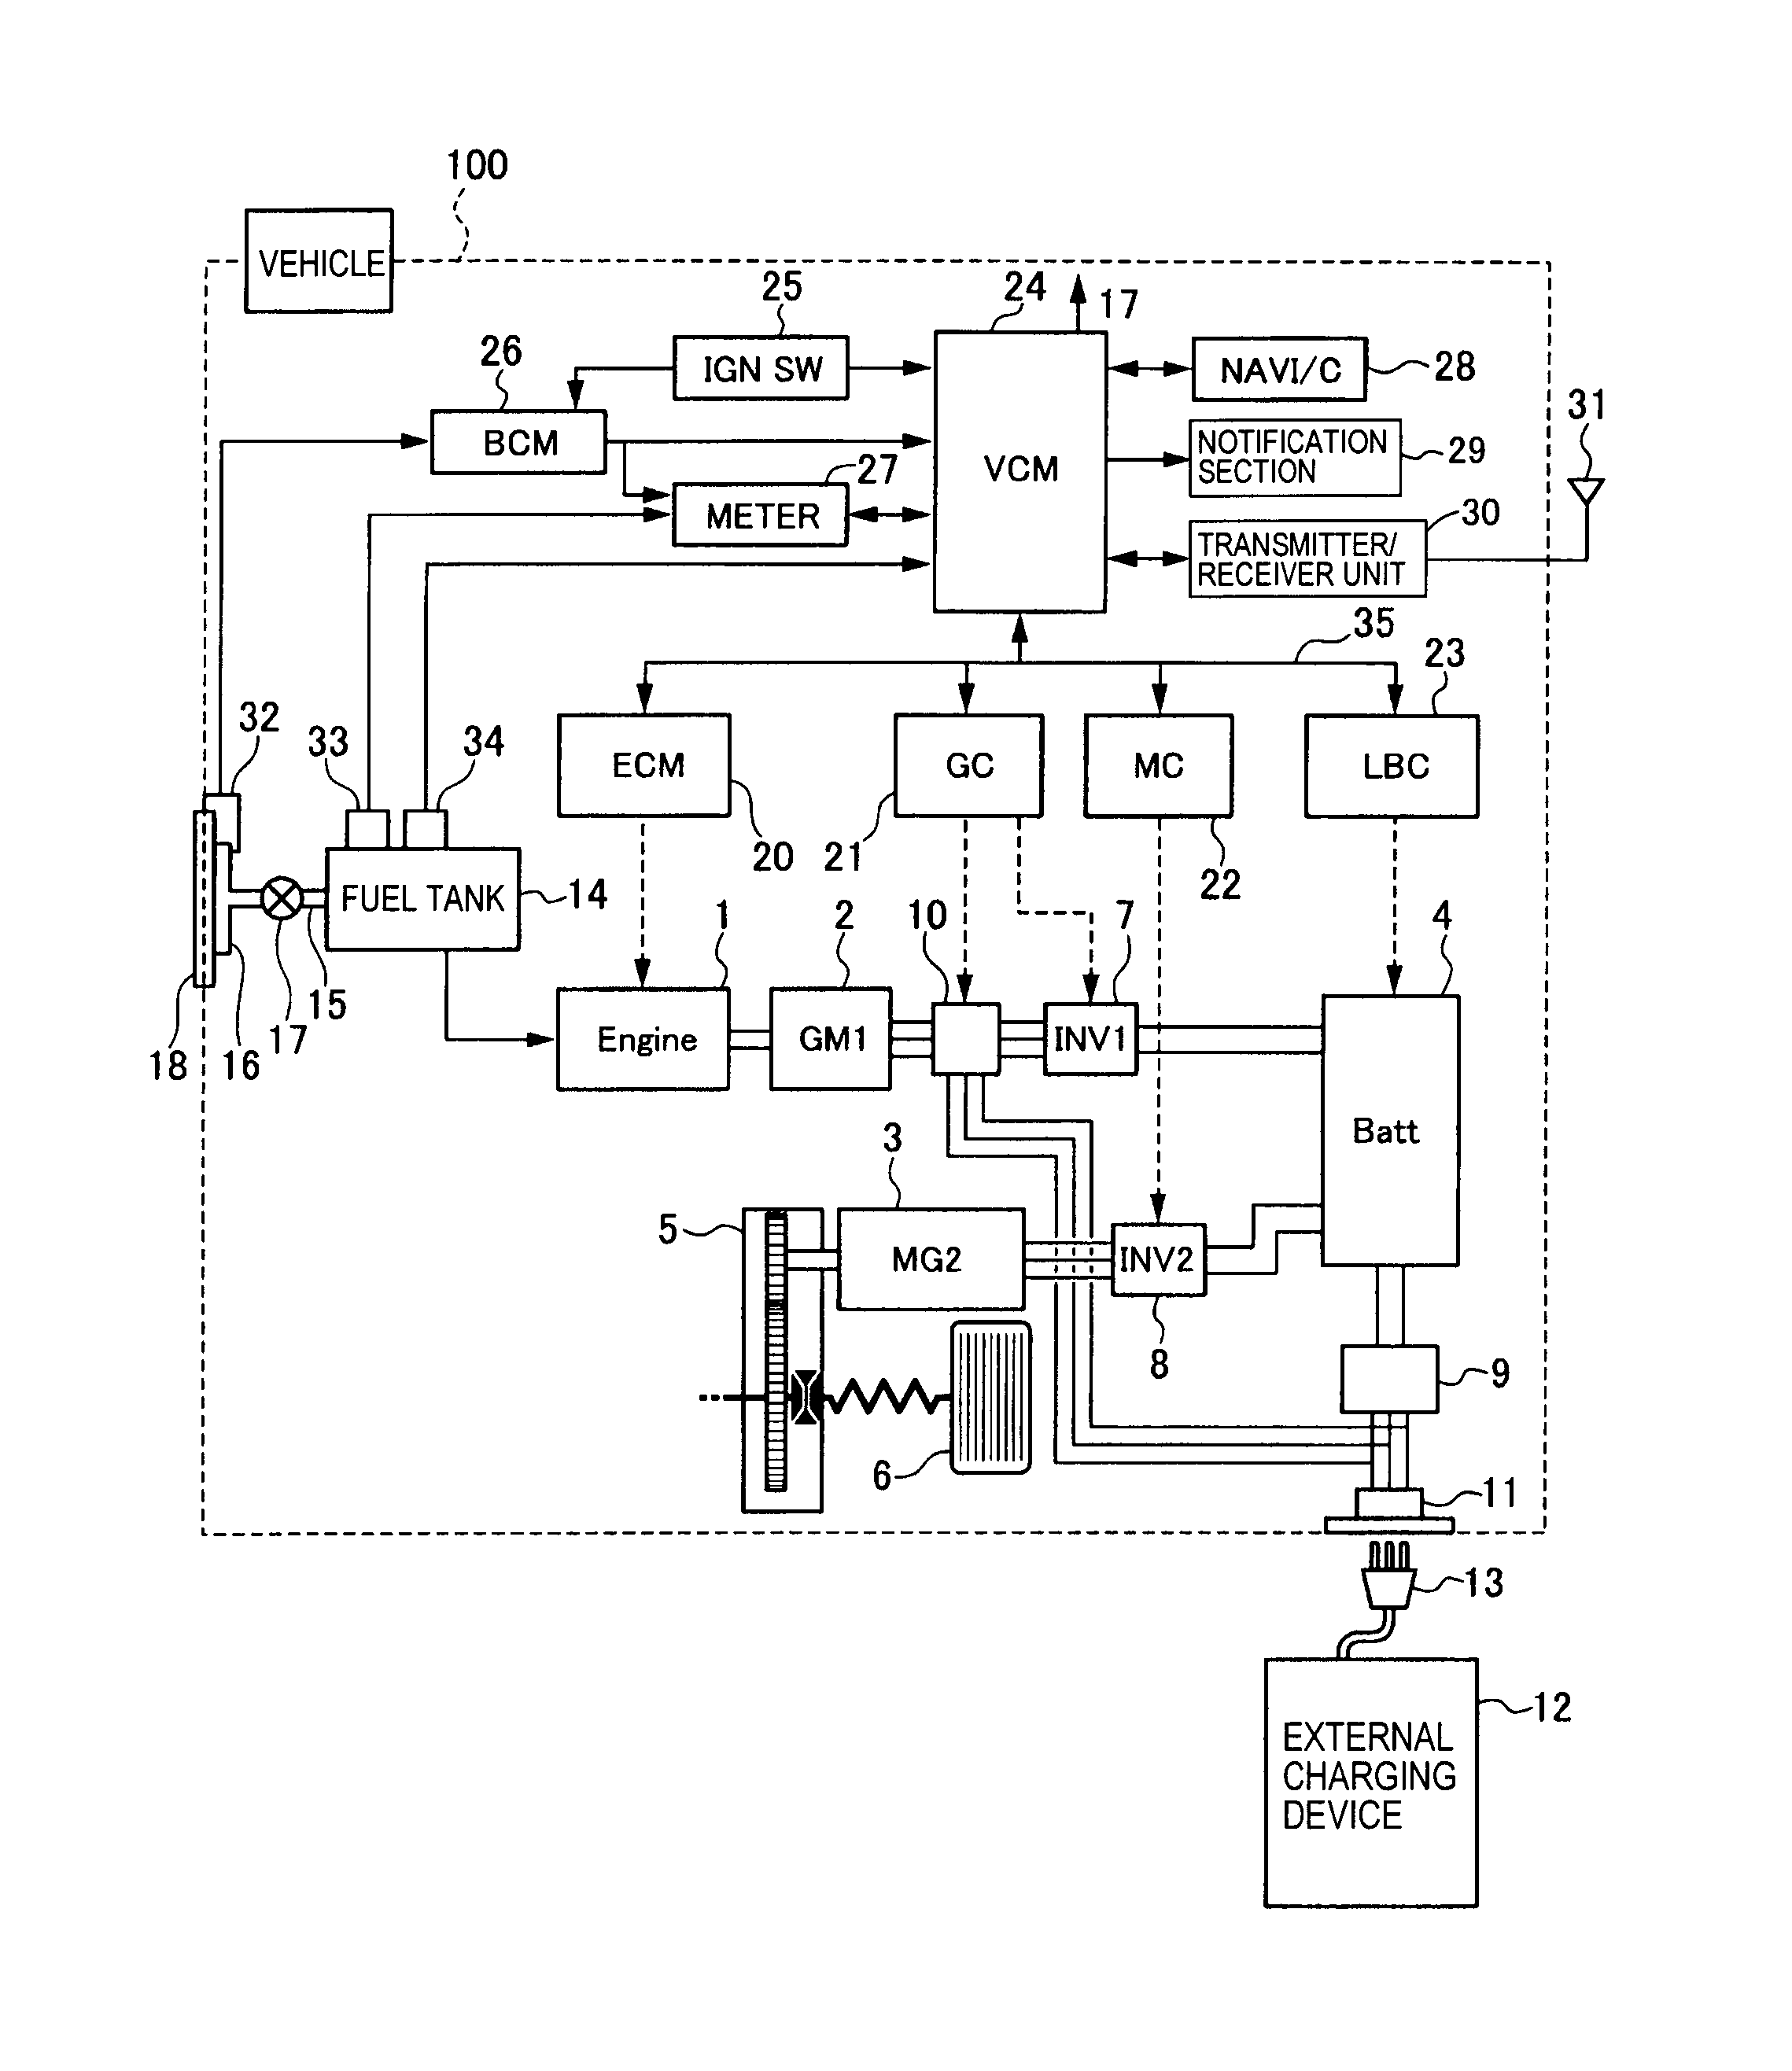 heat controller model reg 183j-20a wiring diagram